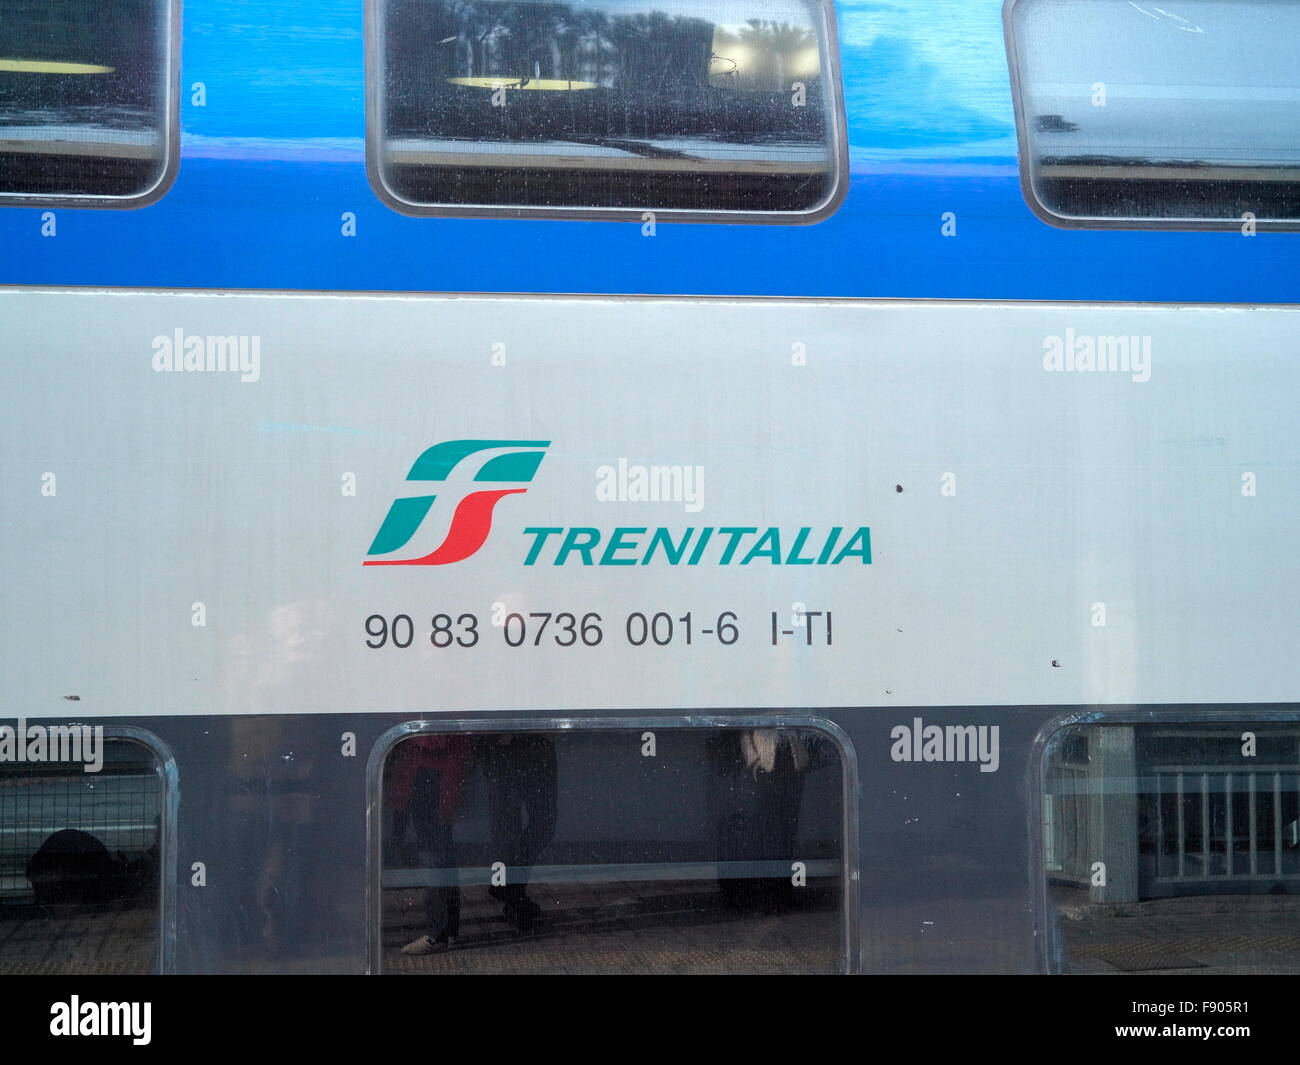 AJAXNETPHOTO. 2015. ROME, ITALY. - RAIL TRANSPORT - REGIONAL TRENITALIA DOUBLE DECKER PASSENGER TRAIN CARRIAGE AND LOGO.  PHOTO:JONATHAN EASTLAND/AJAX REF:GX 151012 75666 Stock Photo